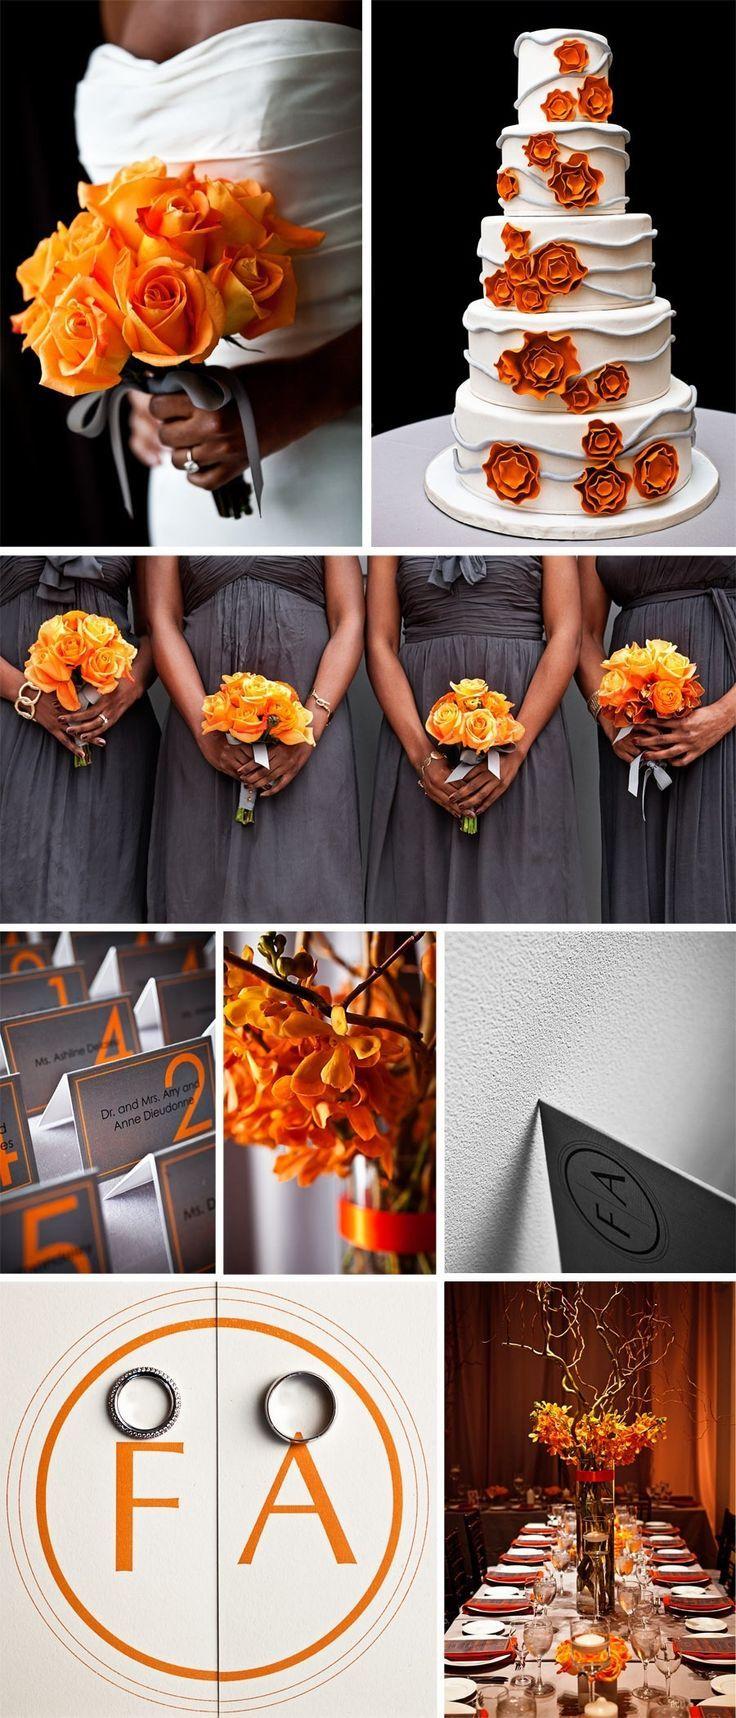 زفاف - Why You Should Consider An Orange Wedding Color - WeddingDash.com